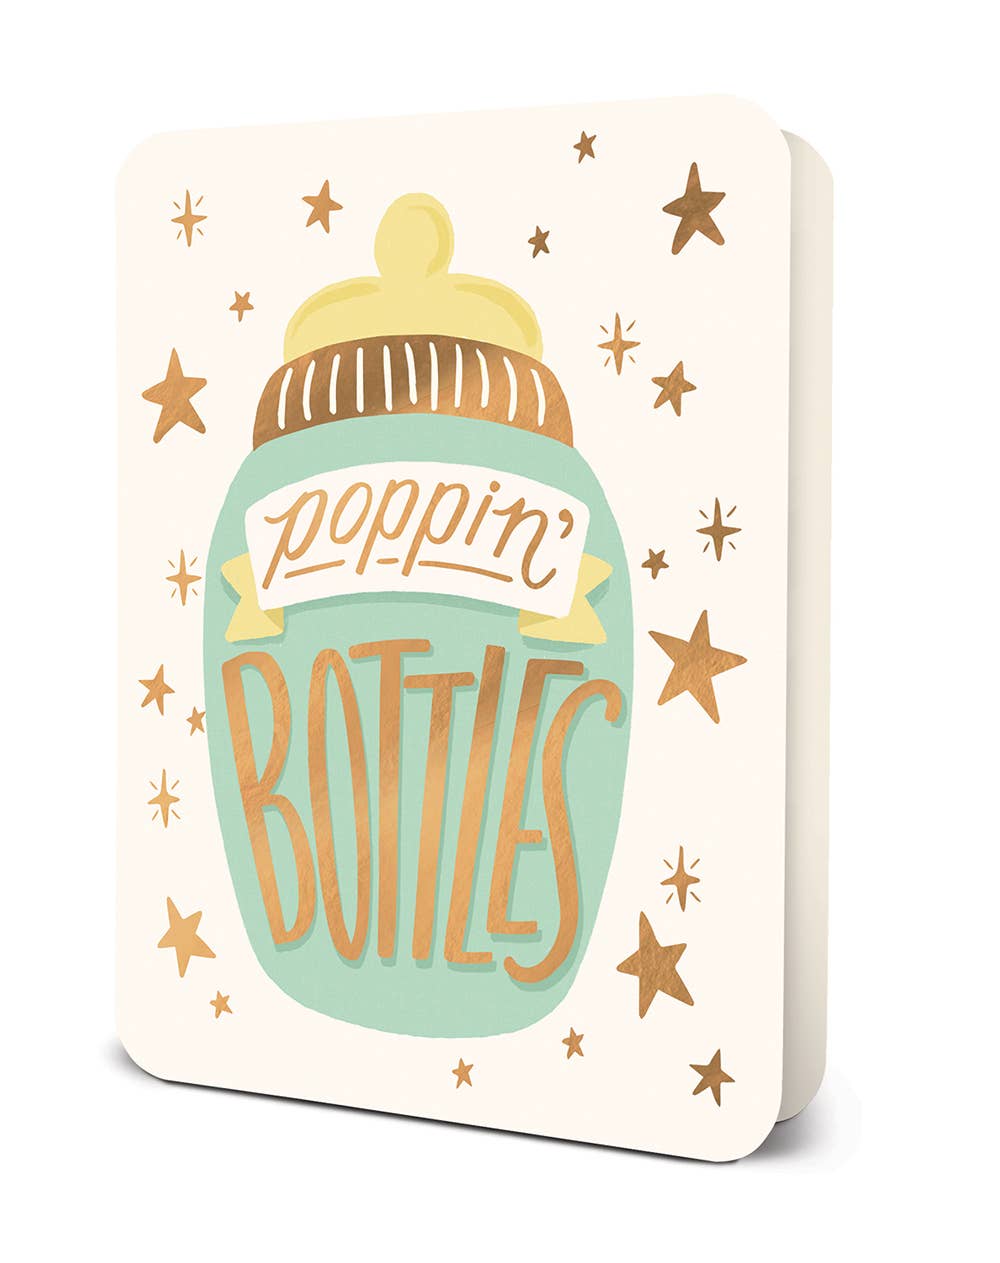 Poppin' Bottles Deluxe Greeting Card